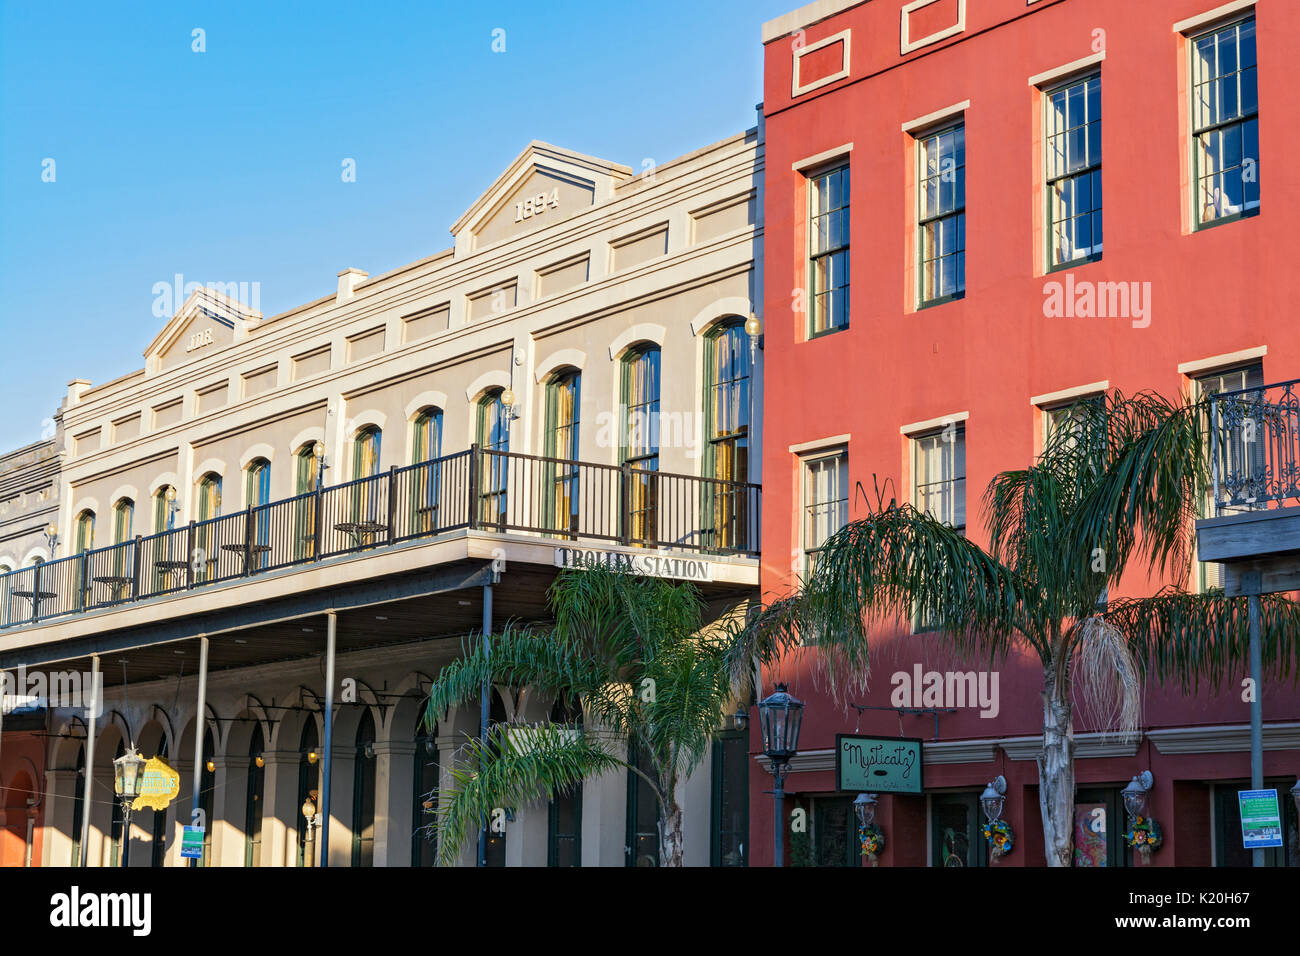 THE STRAND HISTORIC DISTRICT - 254 Photos & 74 Reviews - 2100 Strand,  Galveston, Texas - Local Flavor - Yelp